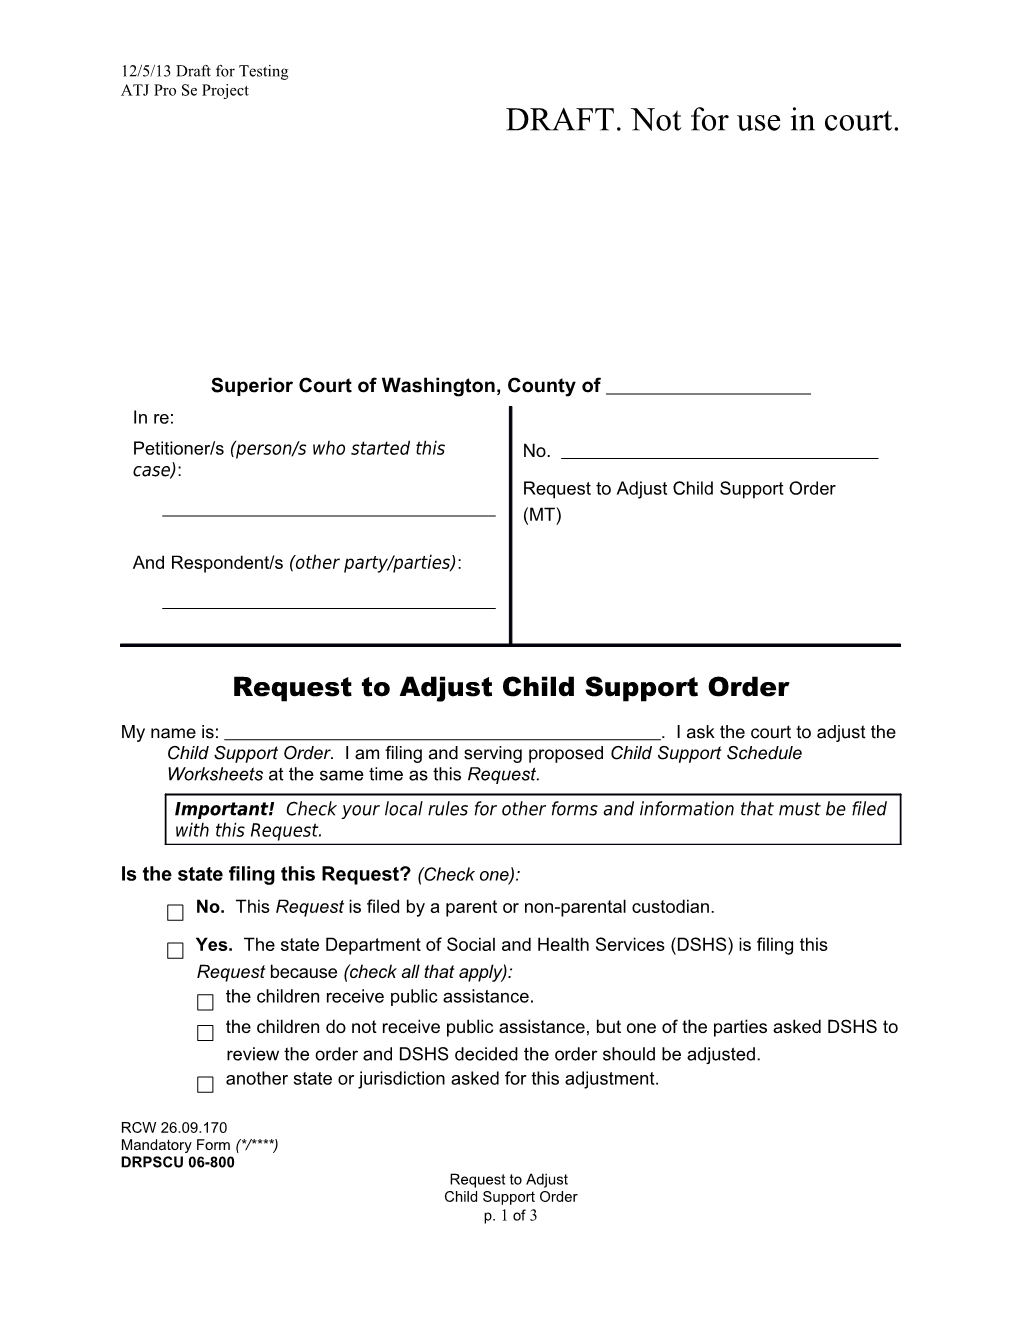 Request to Adjust Child Support Order